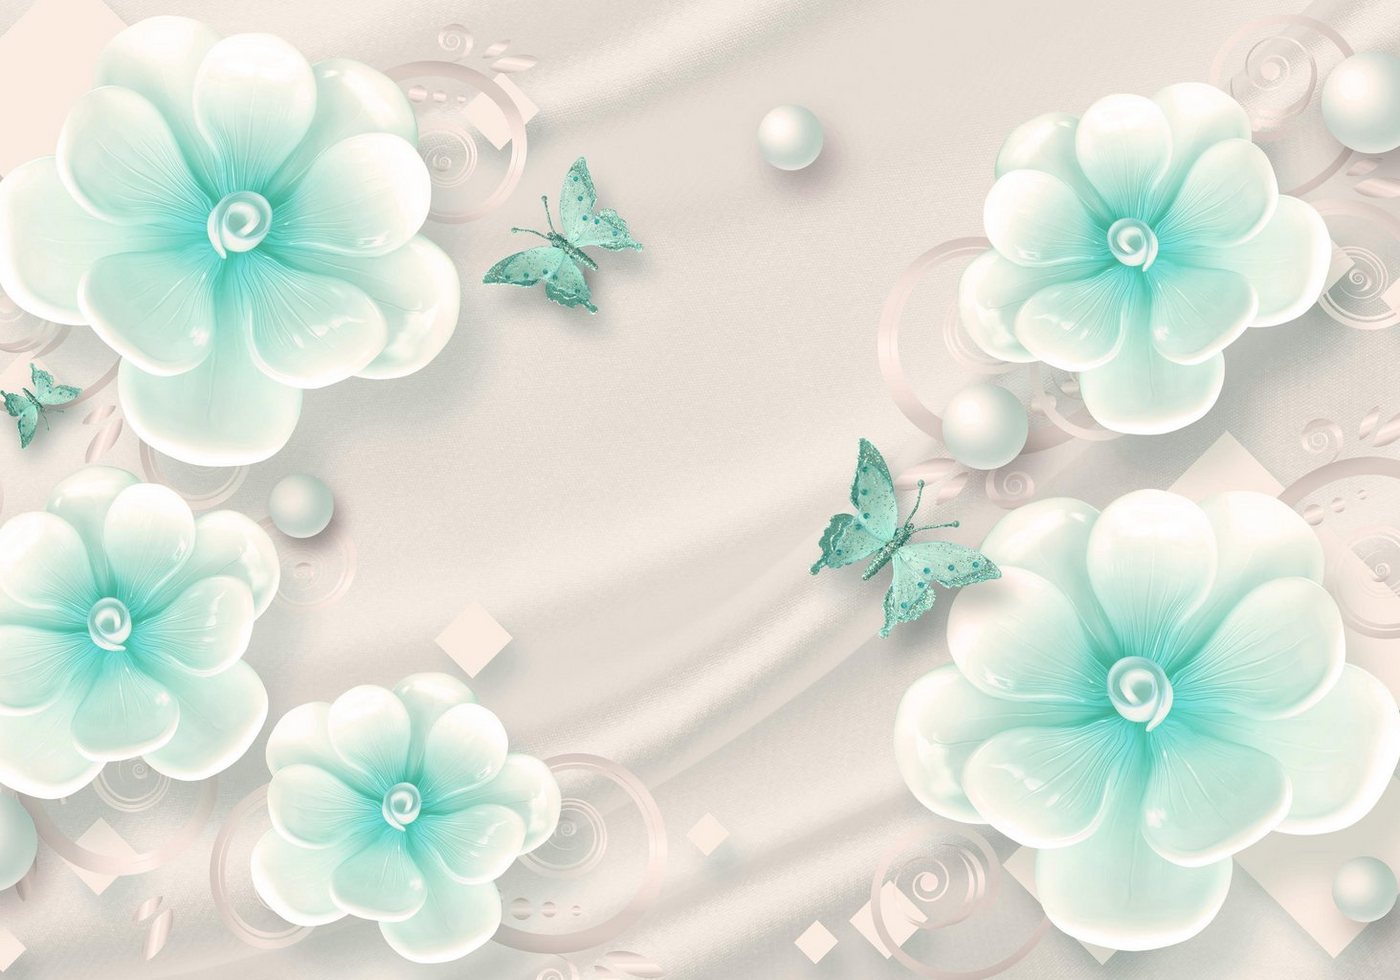 wandmotiv24 Fototapete Türkis Blumen Schmetterlinge Seide Perle, strukturiert, Wandtapete, Motivtapete, matt, Vinyltapete, selbstklebend von wandmotiv24